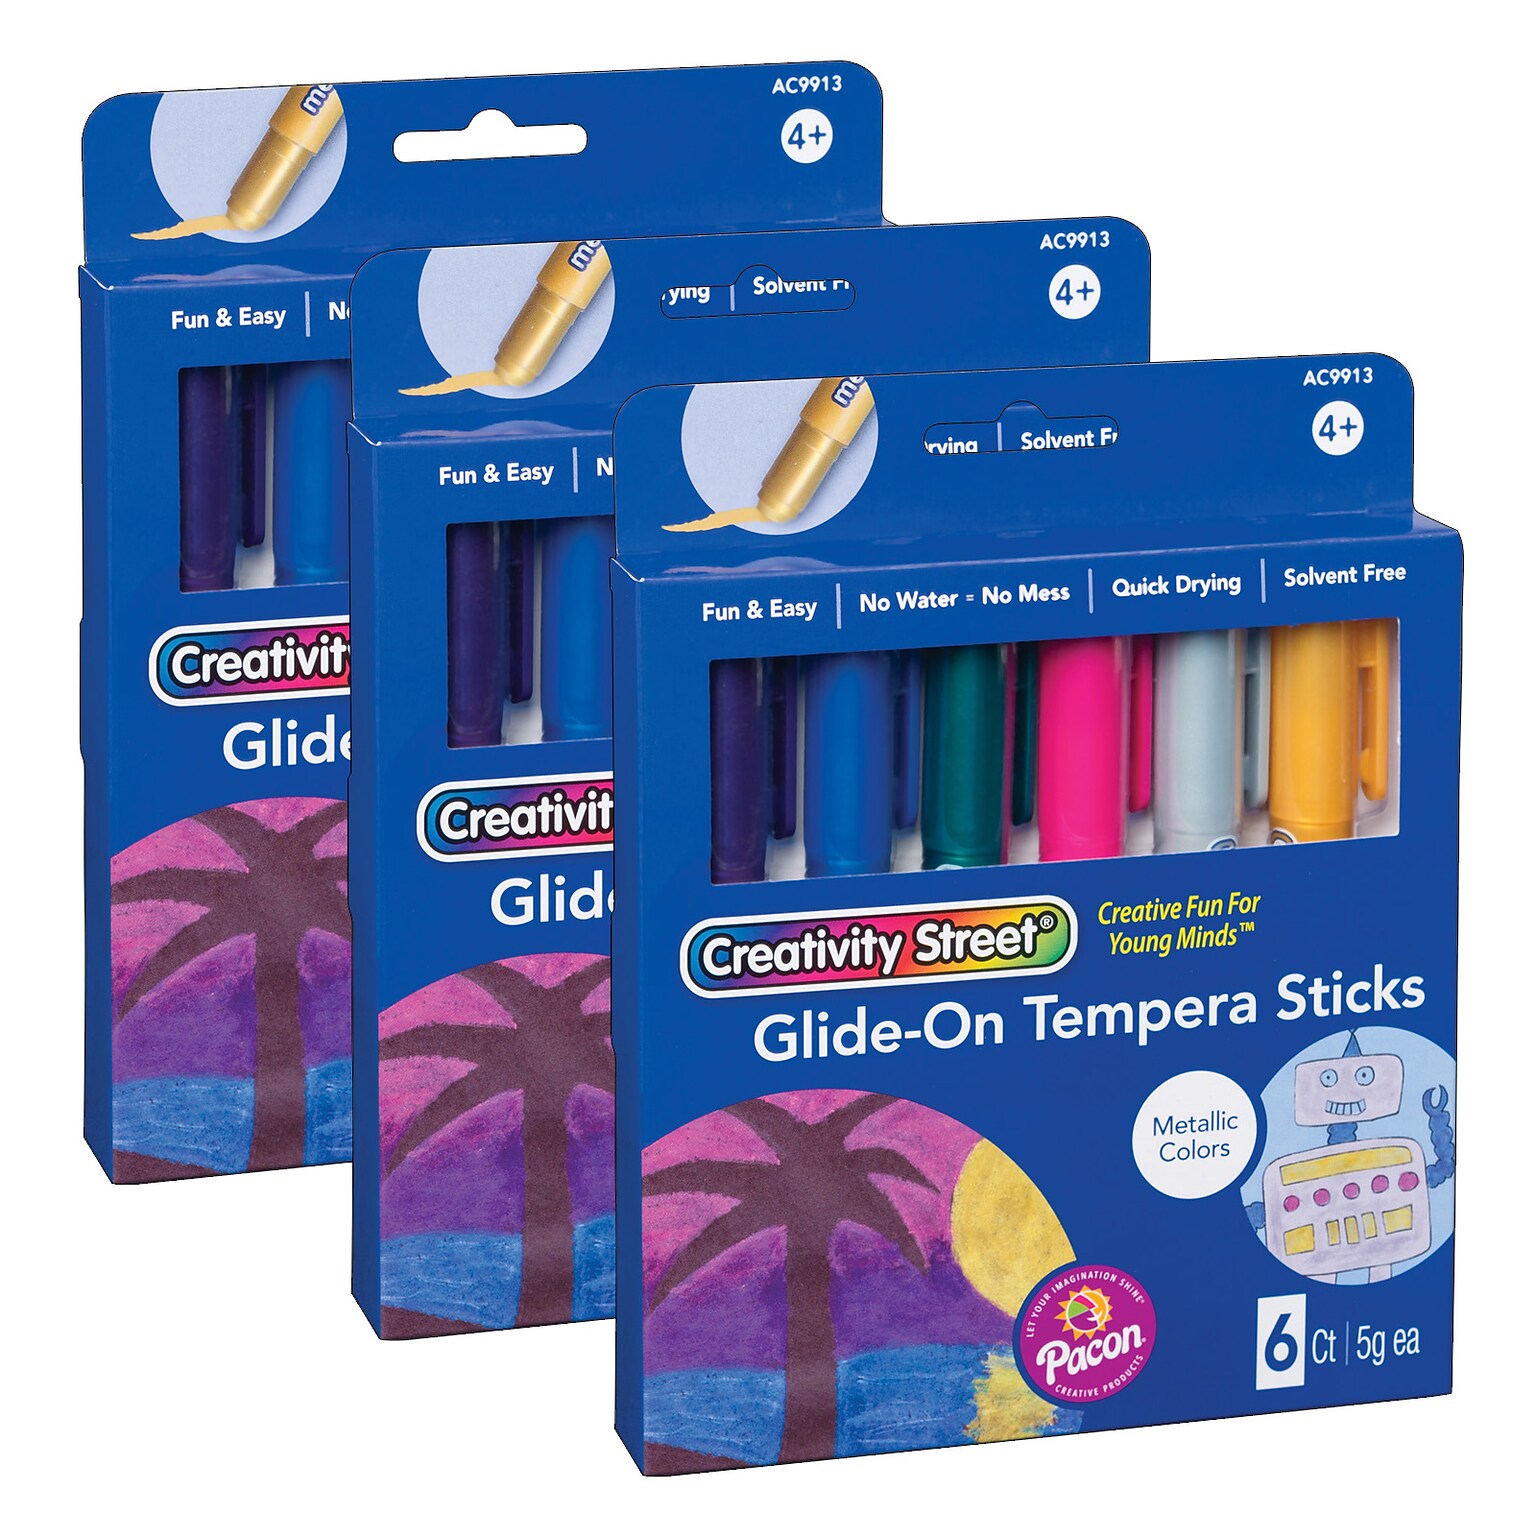 Creativity Street Glide-On Tempera Paint Sticks, Metallic Colors, 5 grams, 6 Per Pack, 3 Packs (PACAC9913-3)